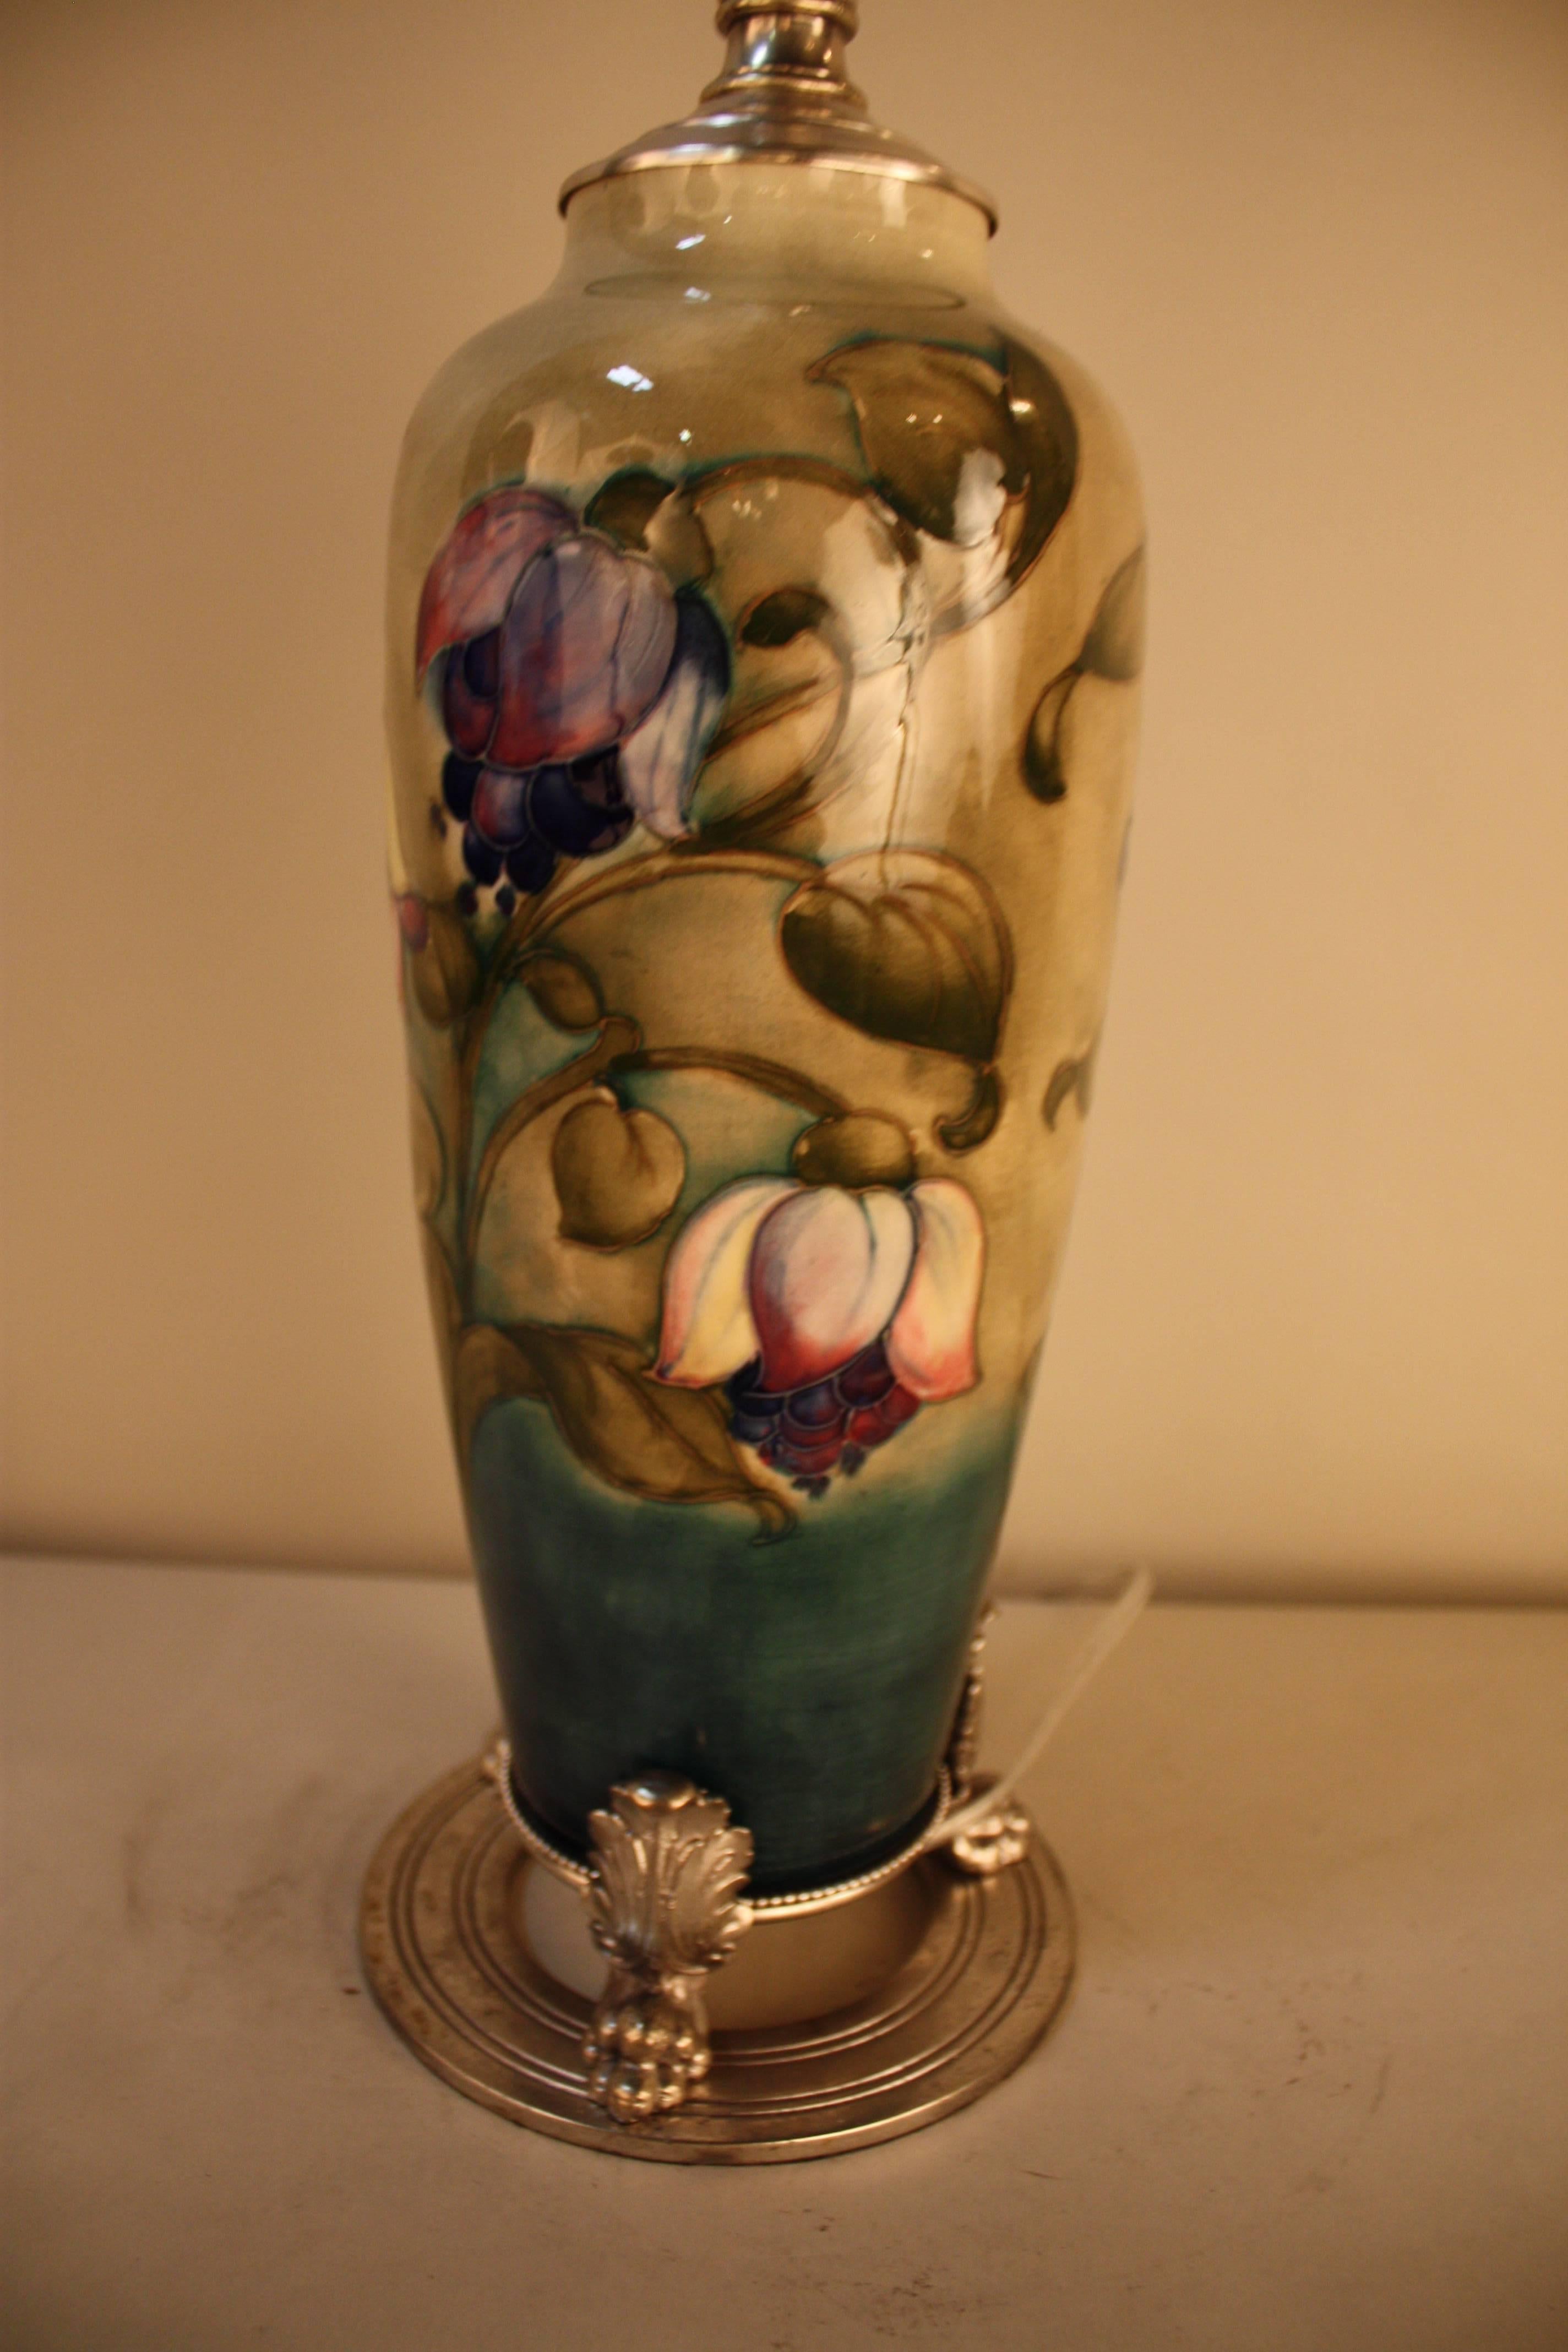 English Ceramic Art Nouveau Style Table Lamp by Moorcroft 1